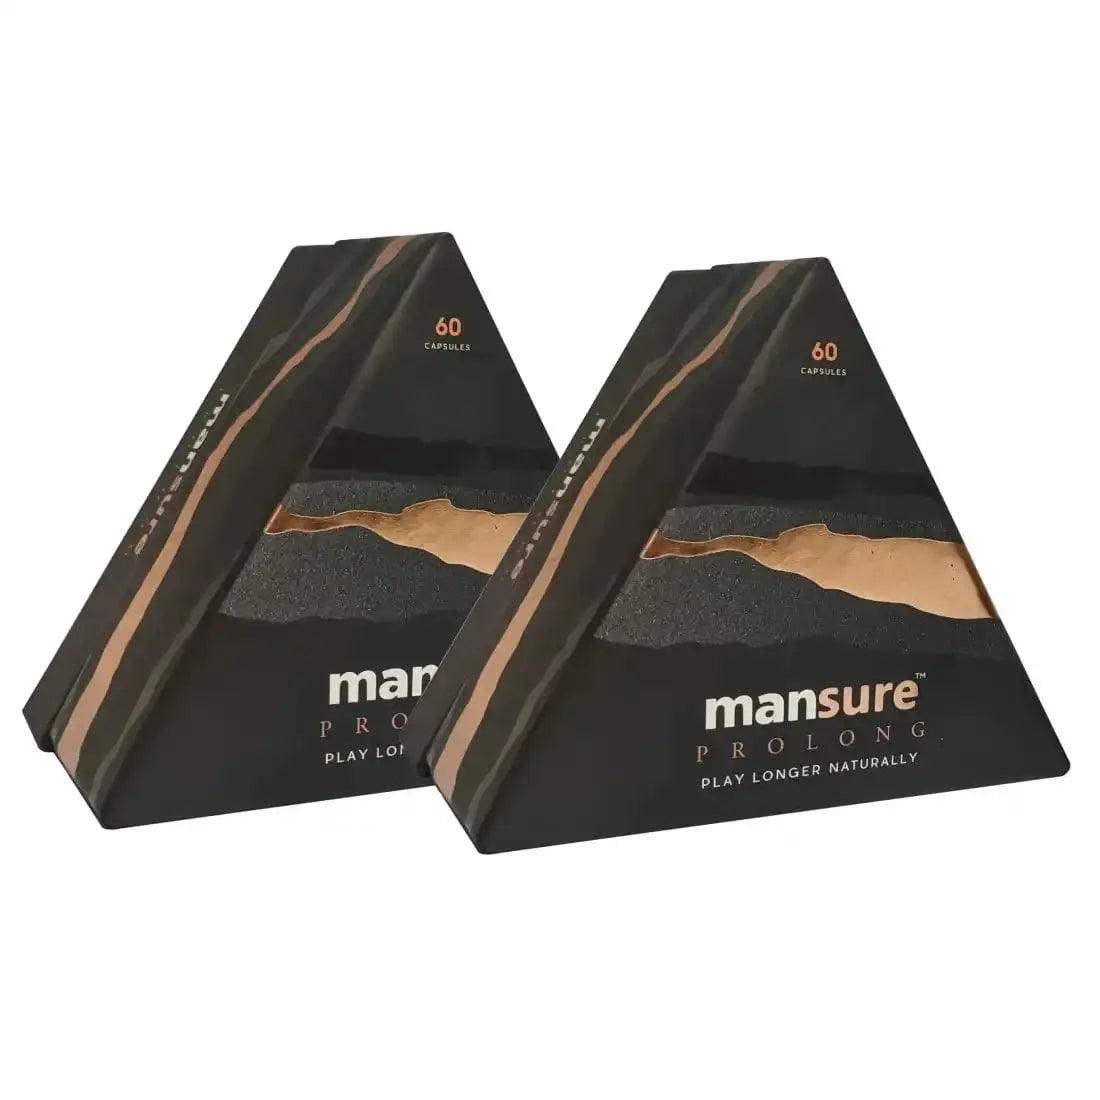 ManSure PROLONG for Men's Health - 60 Capsules 9559682308016